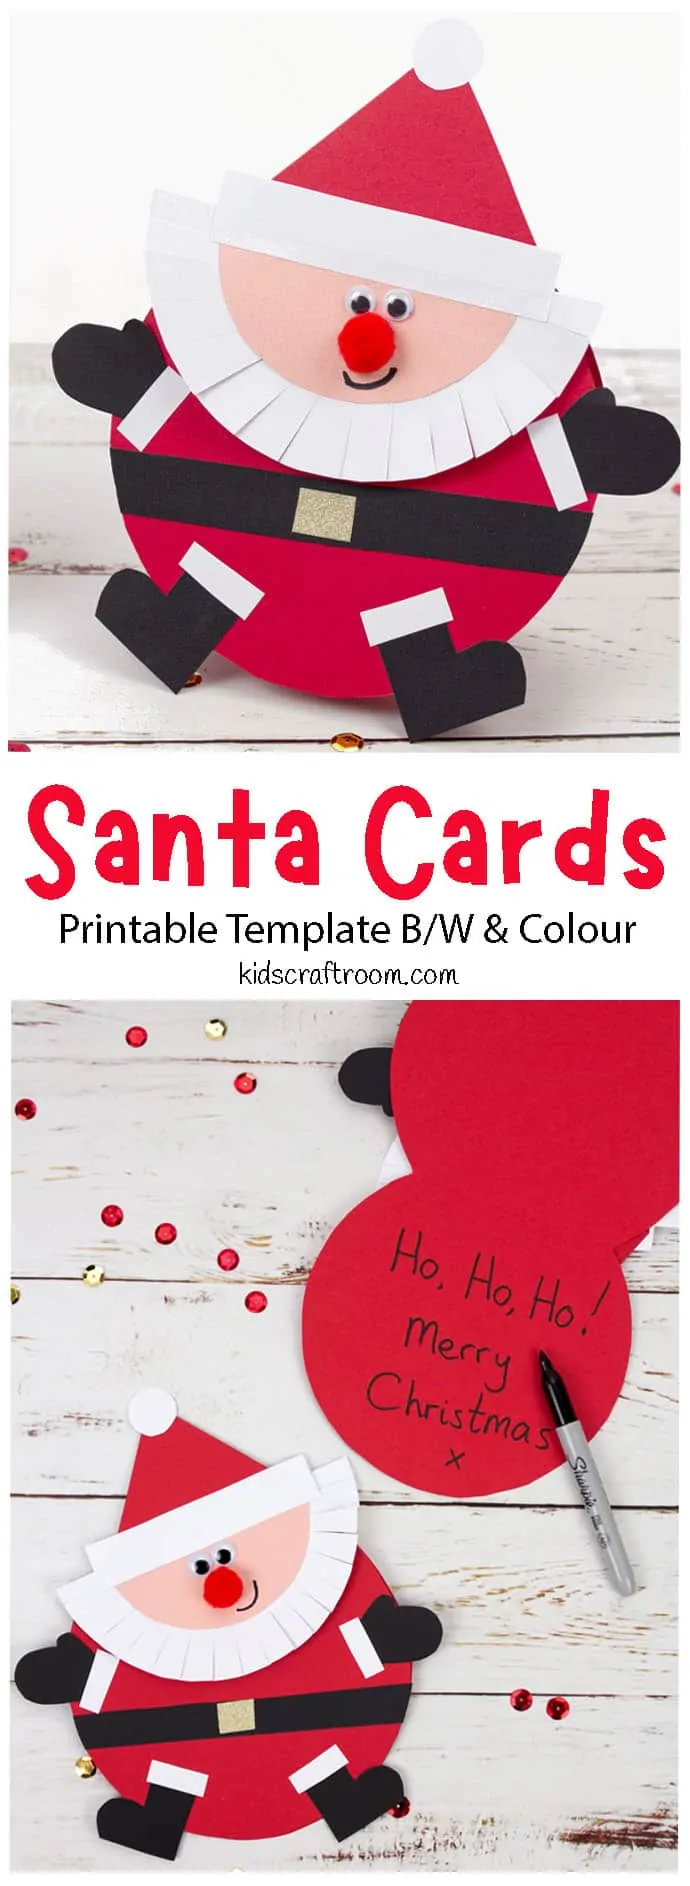 Round Santa Christmas Cards Craft pin image 1.